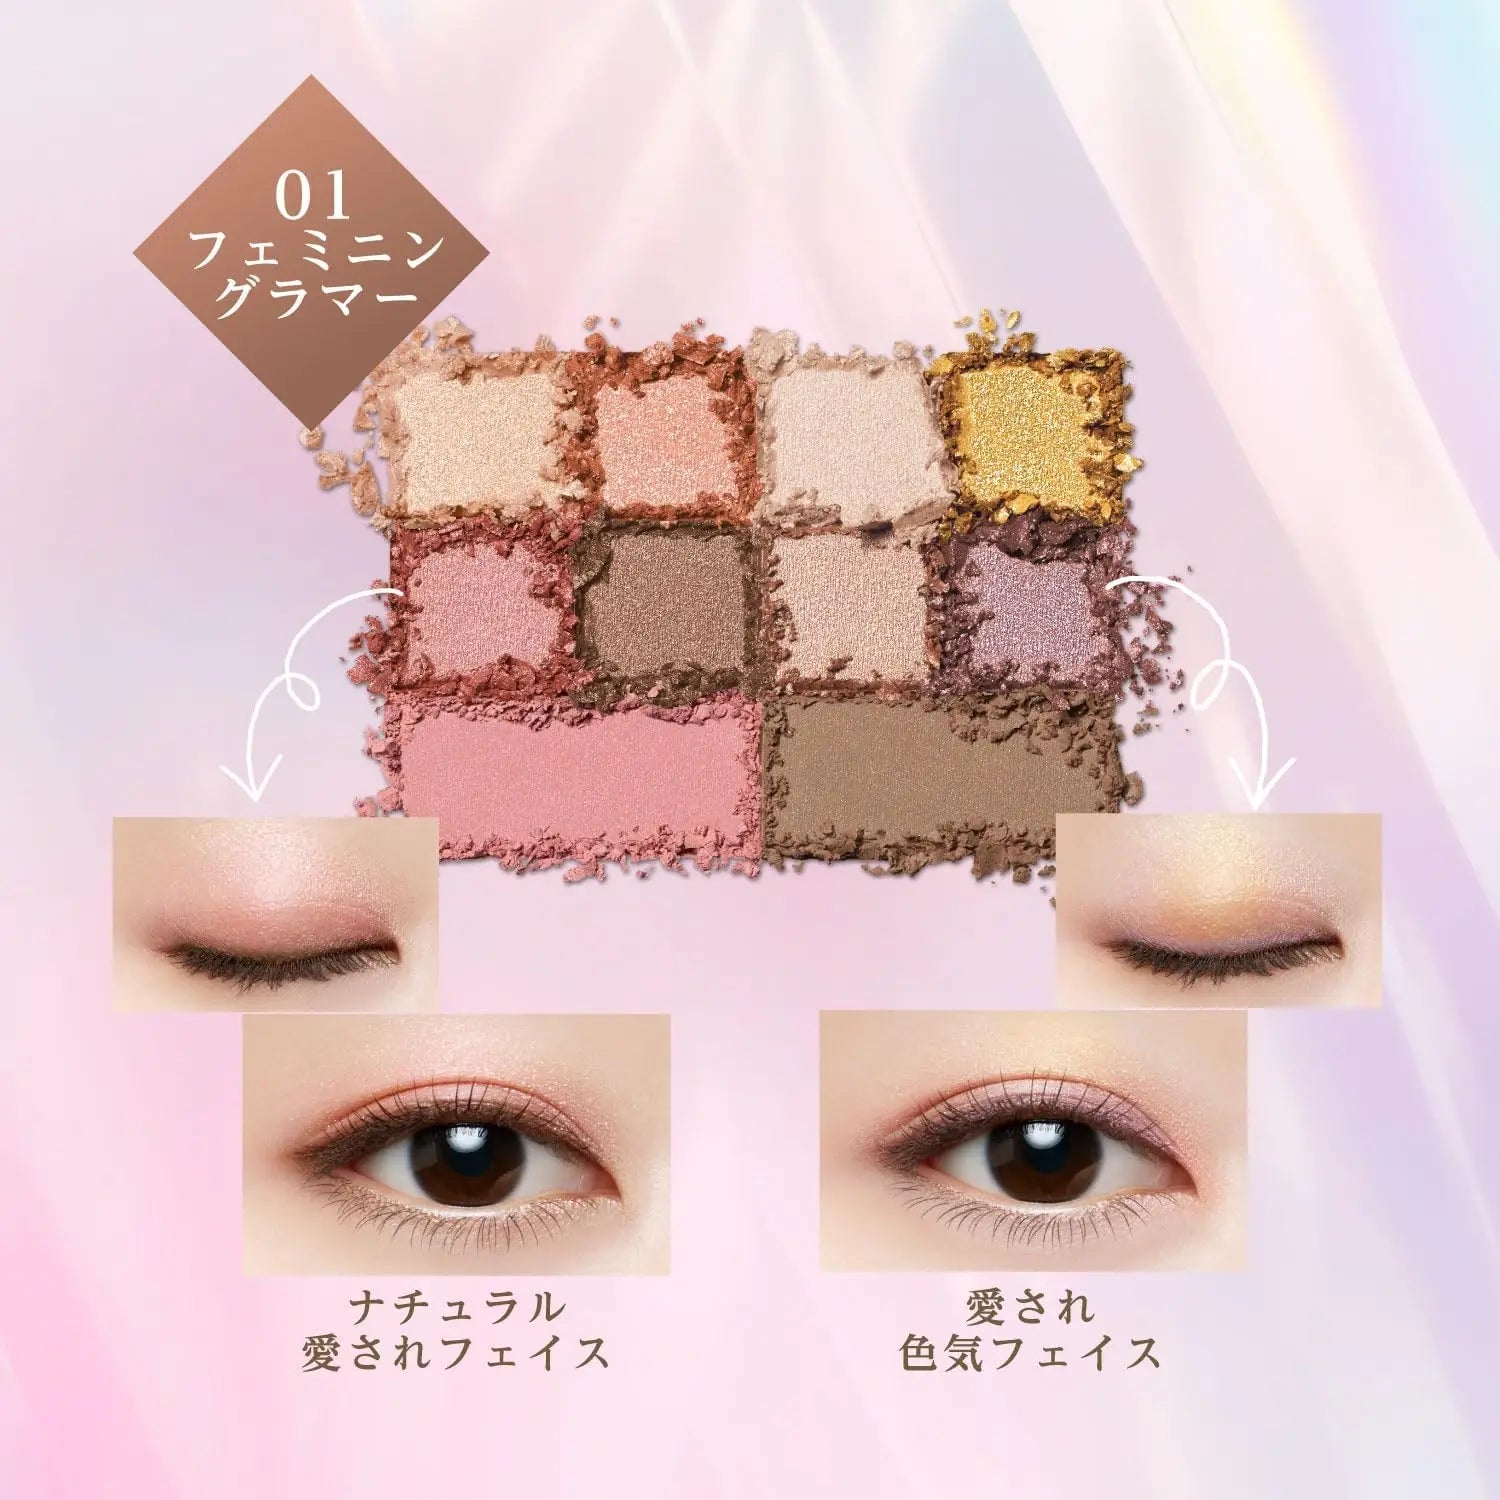 Kose Visee 30th Glamorous Layered Palette 13g (Various Shades) - Buy Me Japan